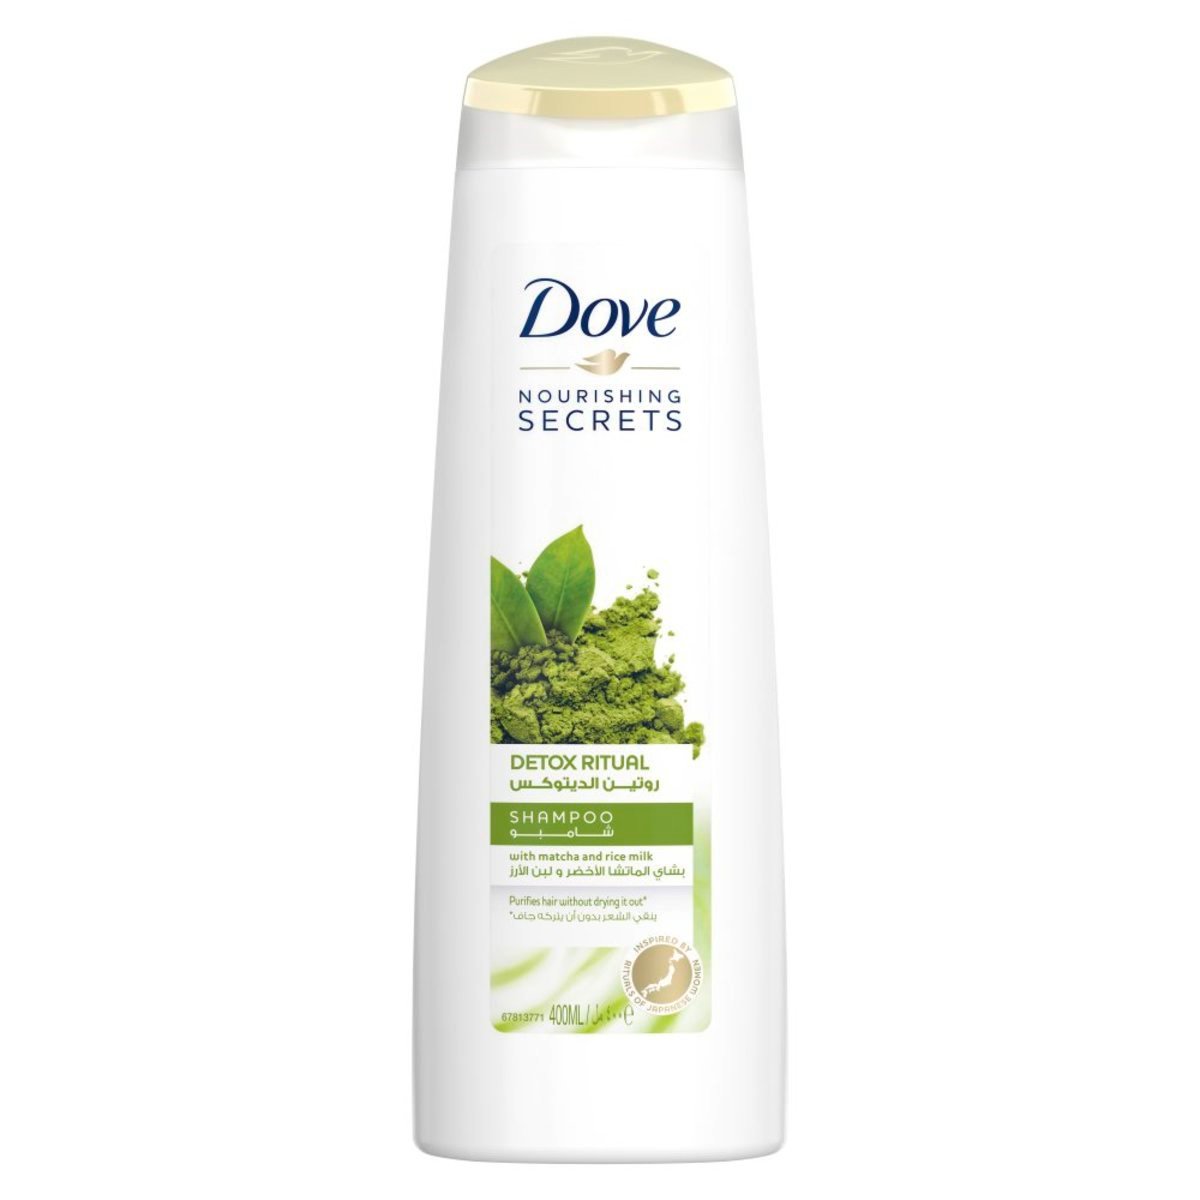 Dove Nourishing Secrets Shampoo Detox Ritual- Matcha and Rice Milk 400 ml